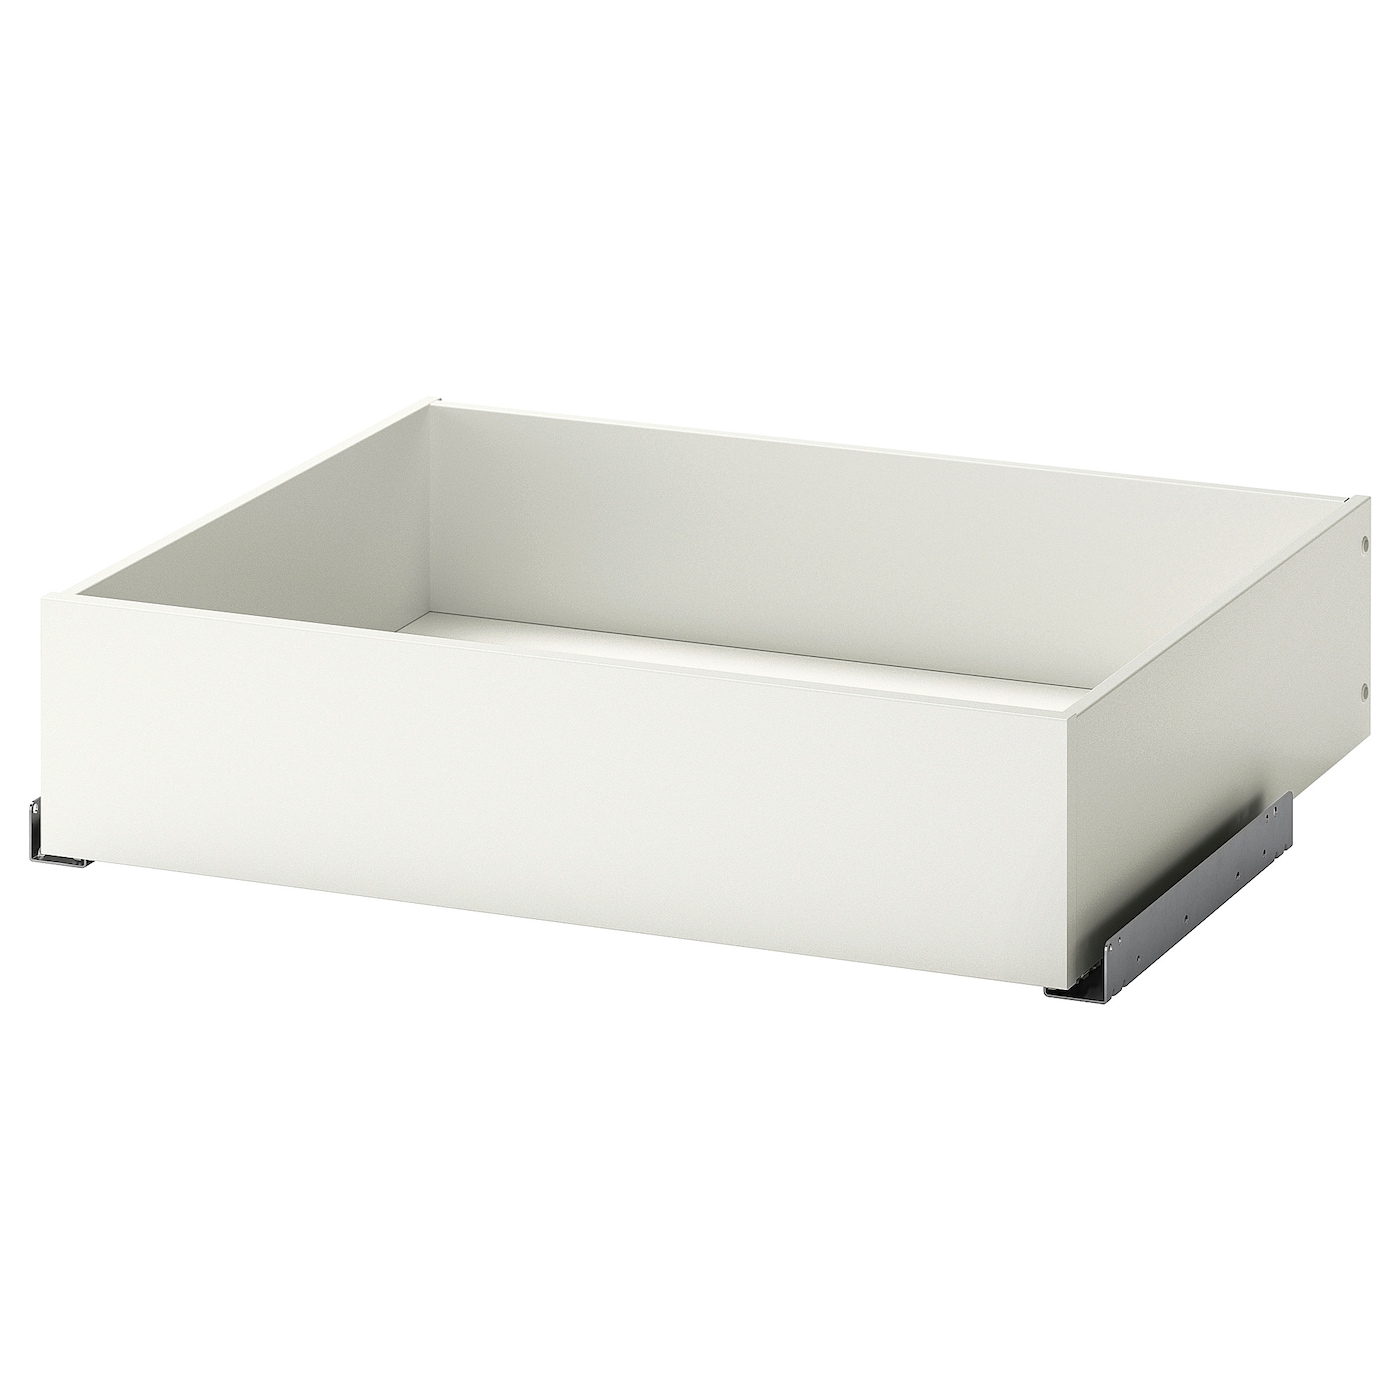 Ящик - IKEA KOMPLEMENT, 75x58 см, белый КОМПЛИМЕНТ ИКЕА